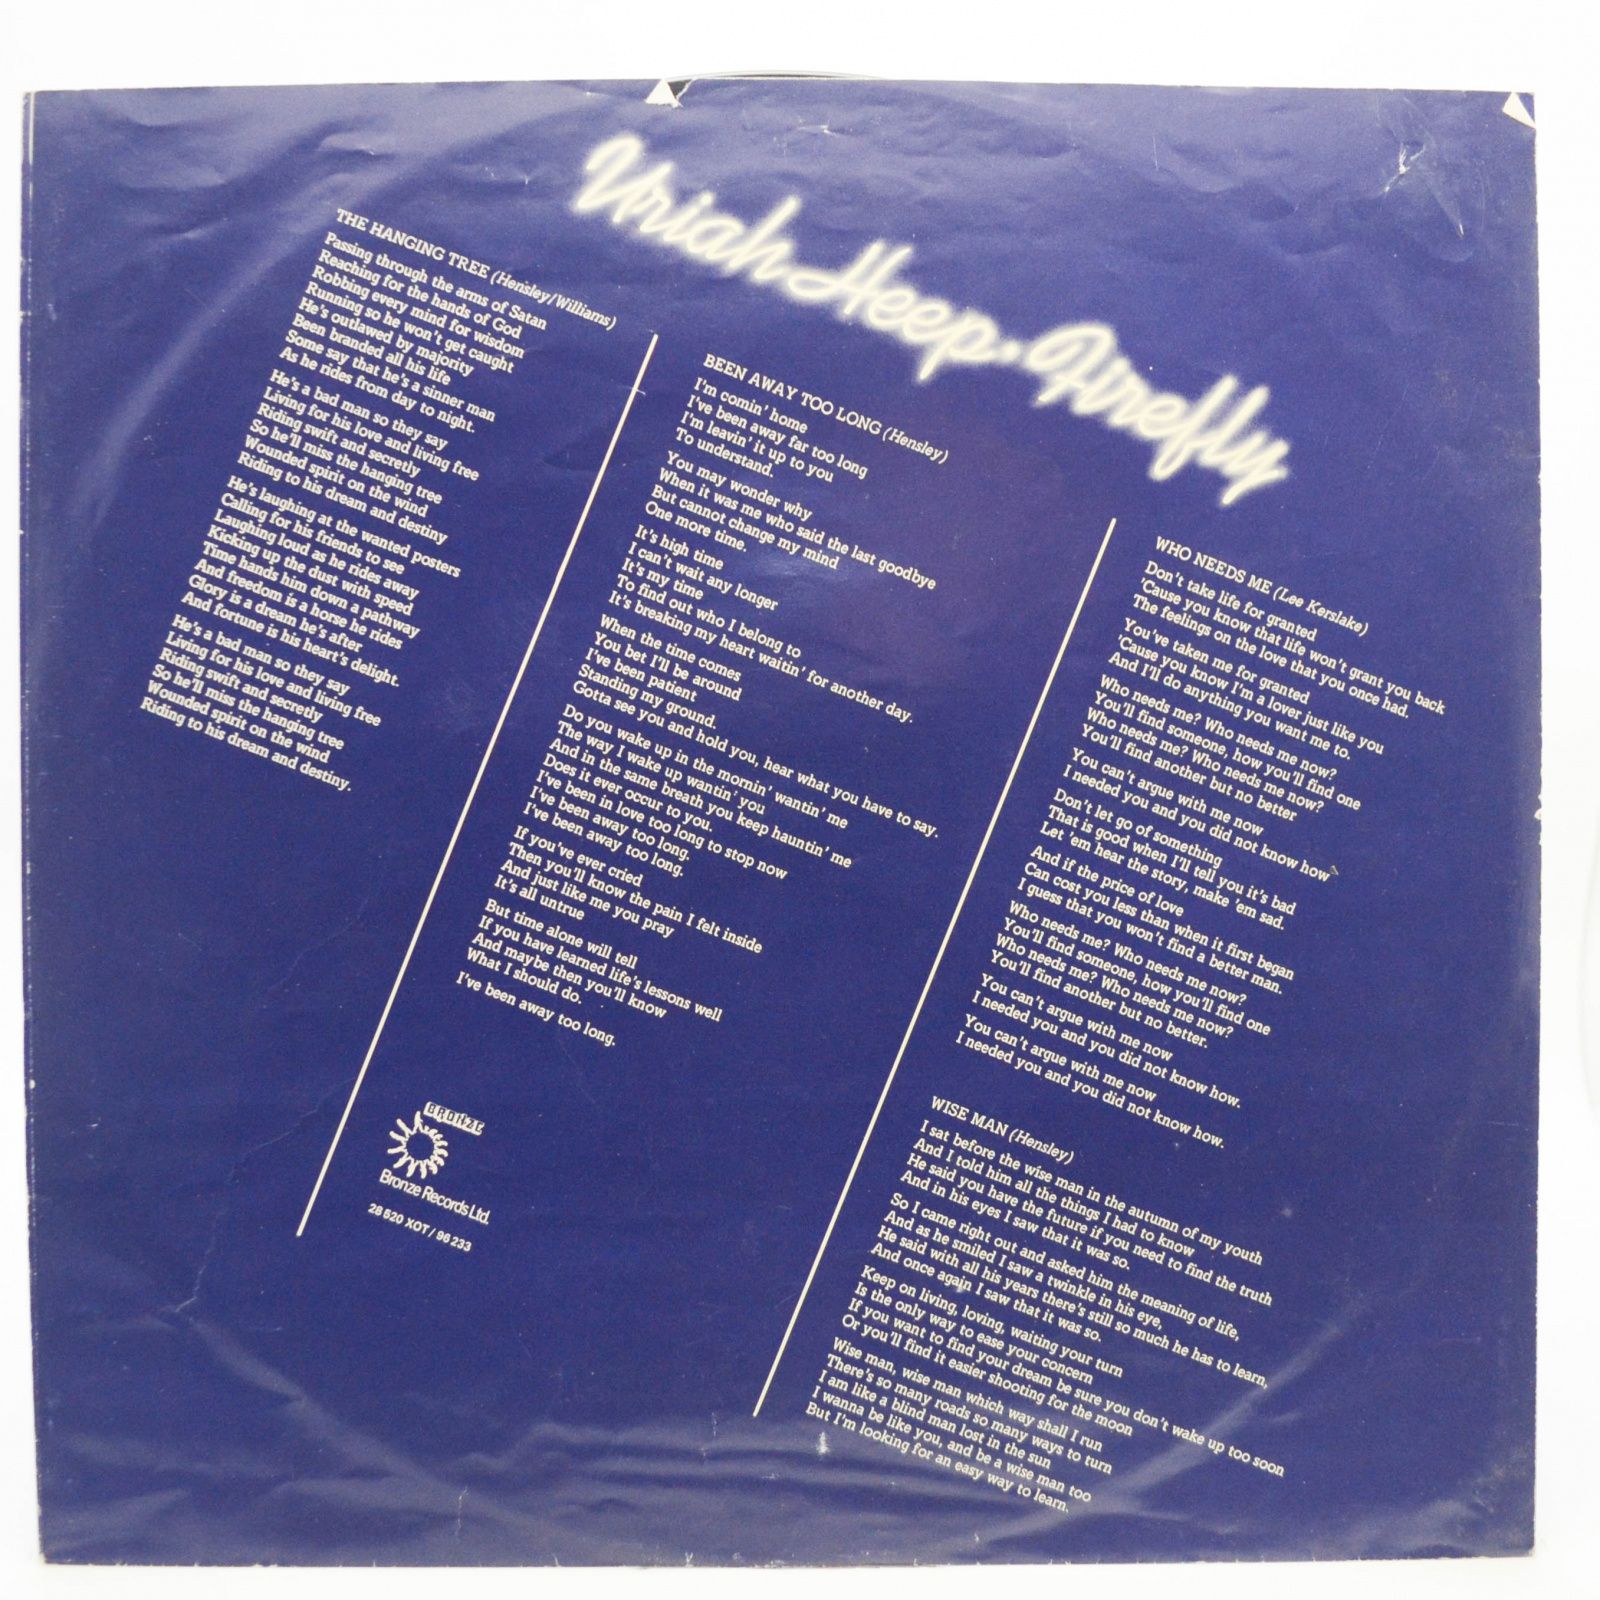 Uriah Heep — Firefly, 1977